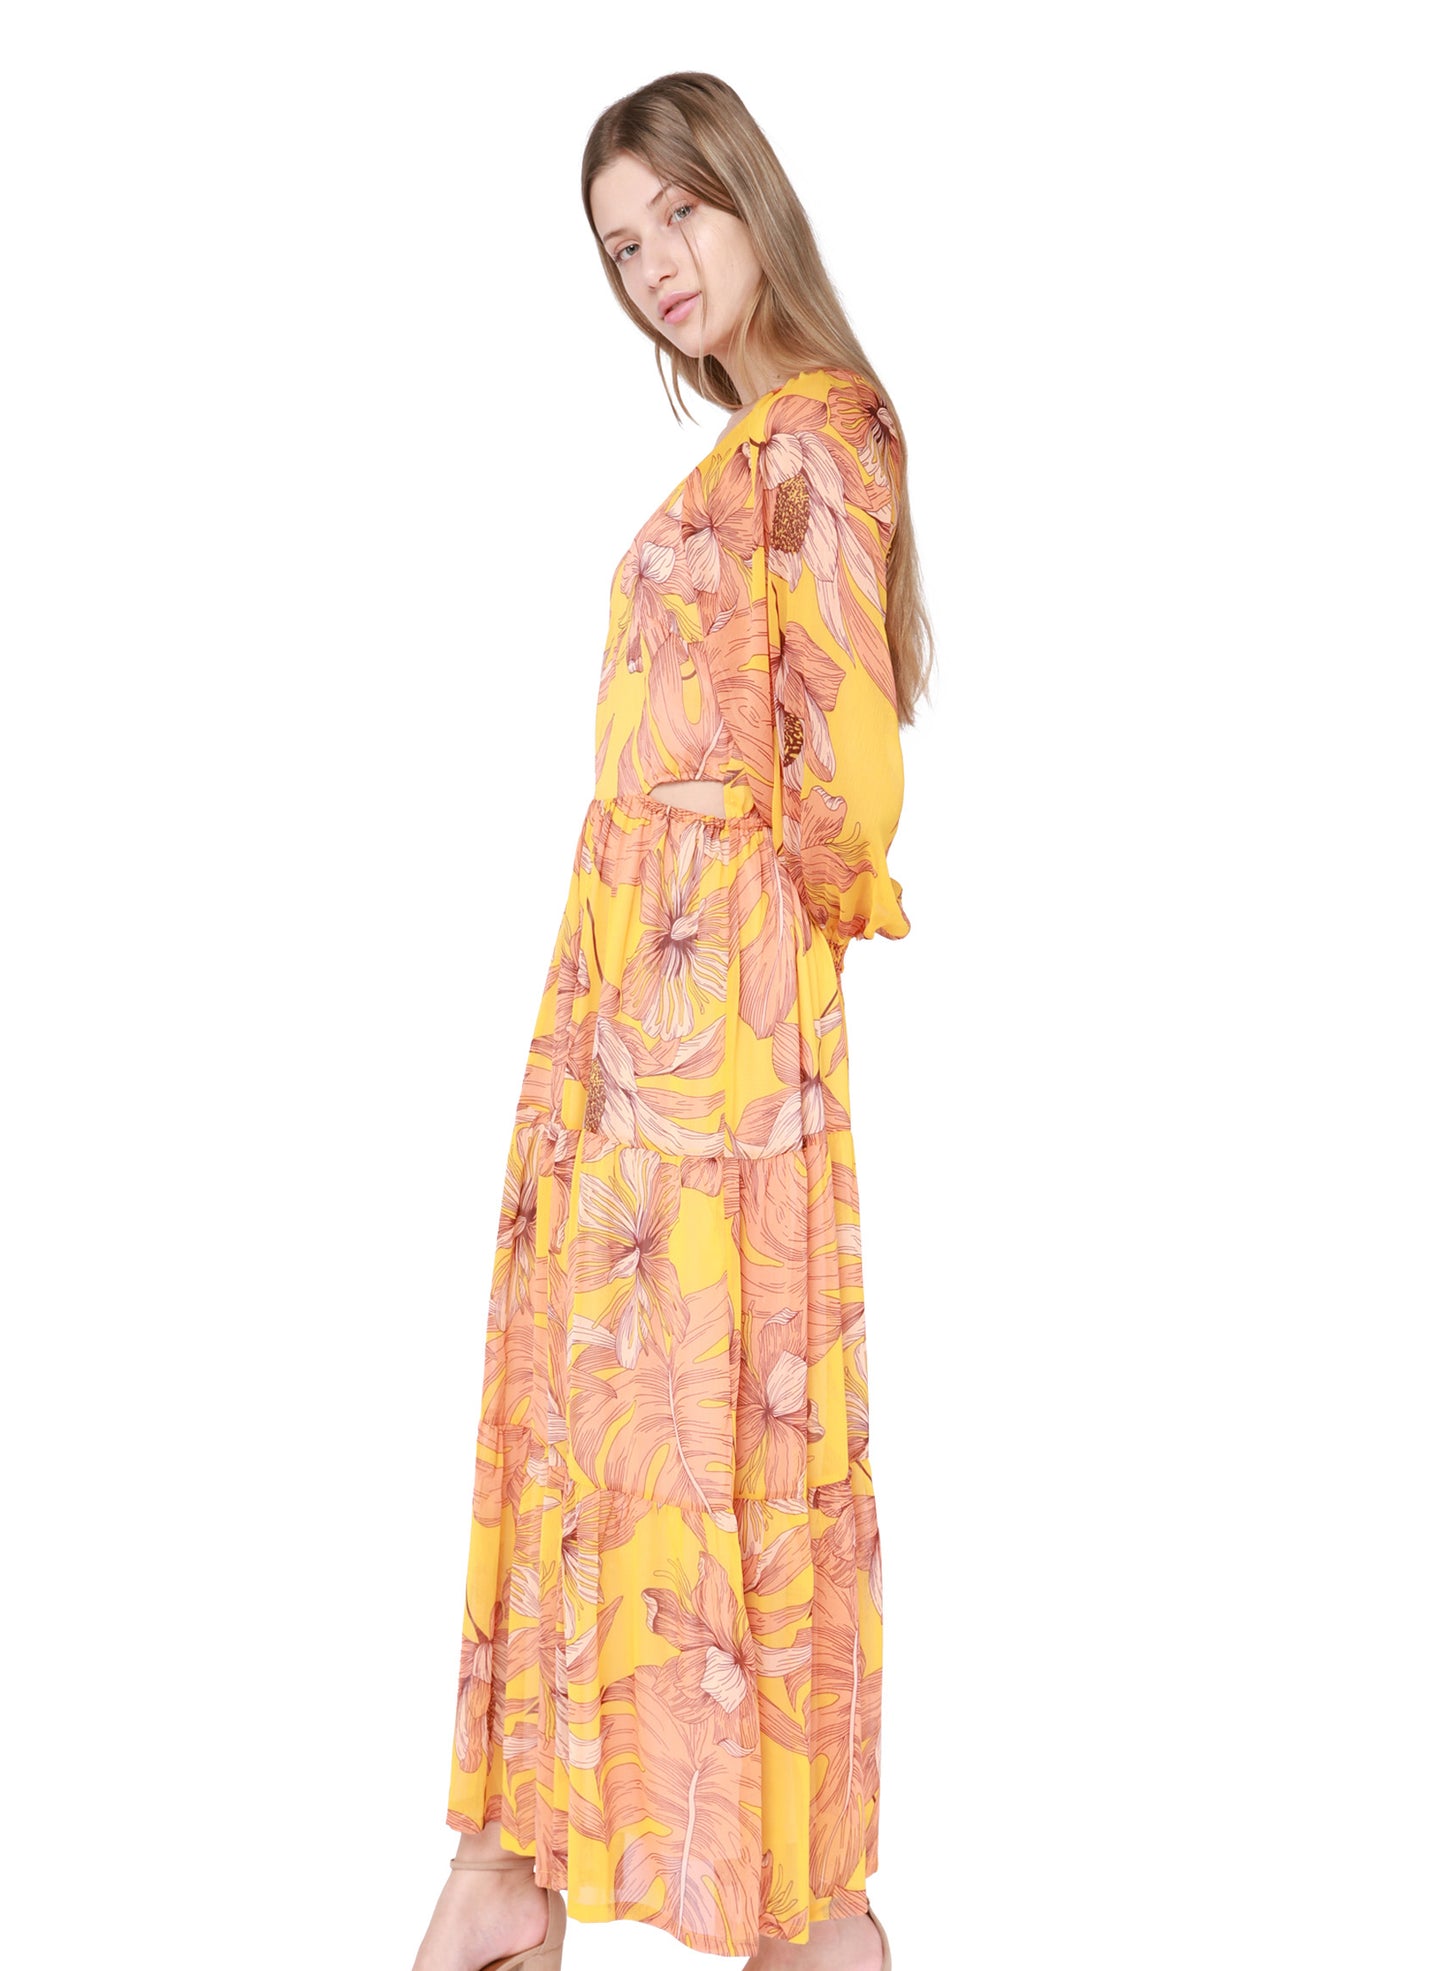 Floral Dreams Maxi Dress - FINAL SALE